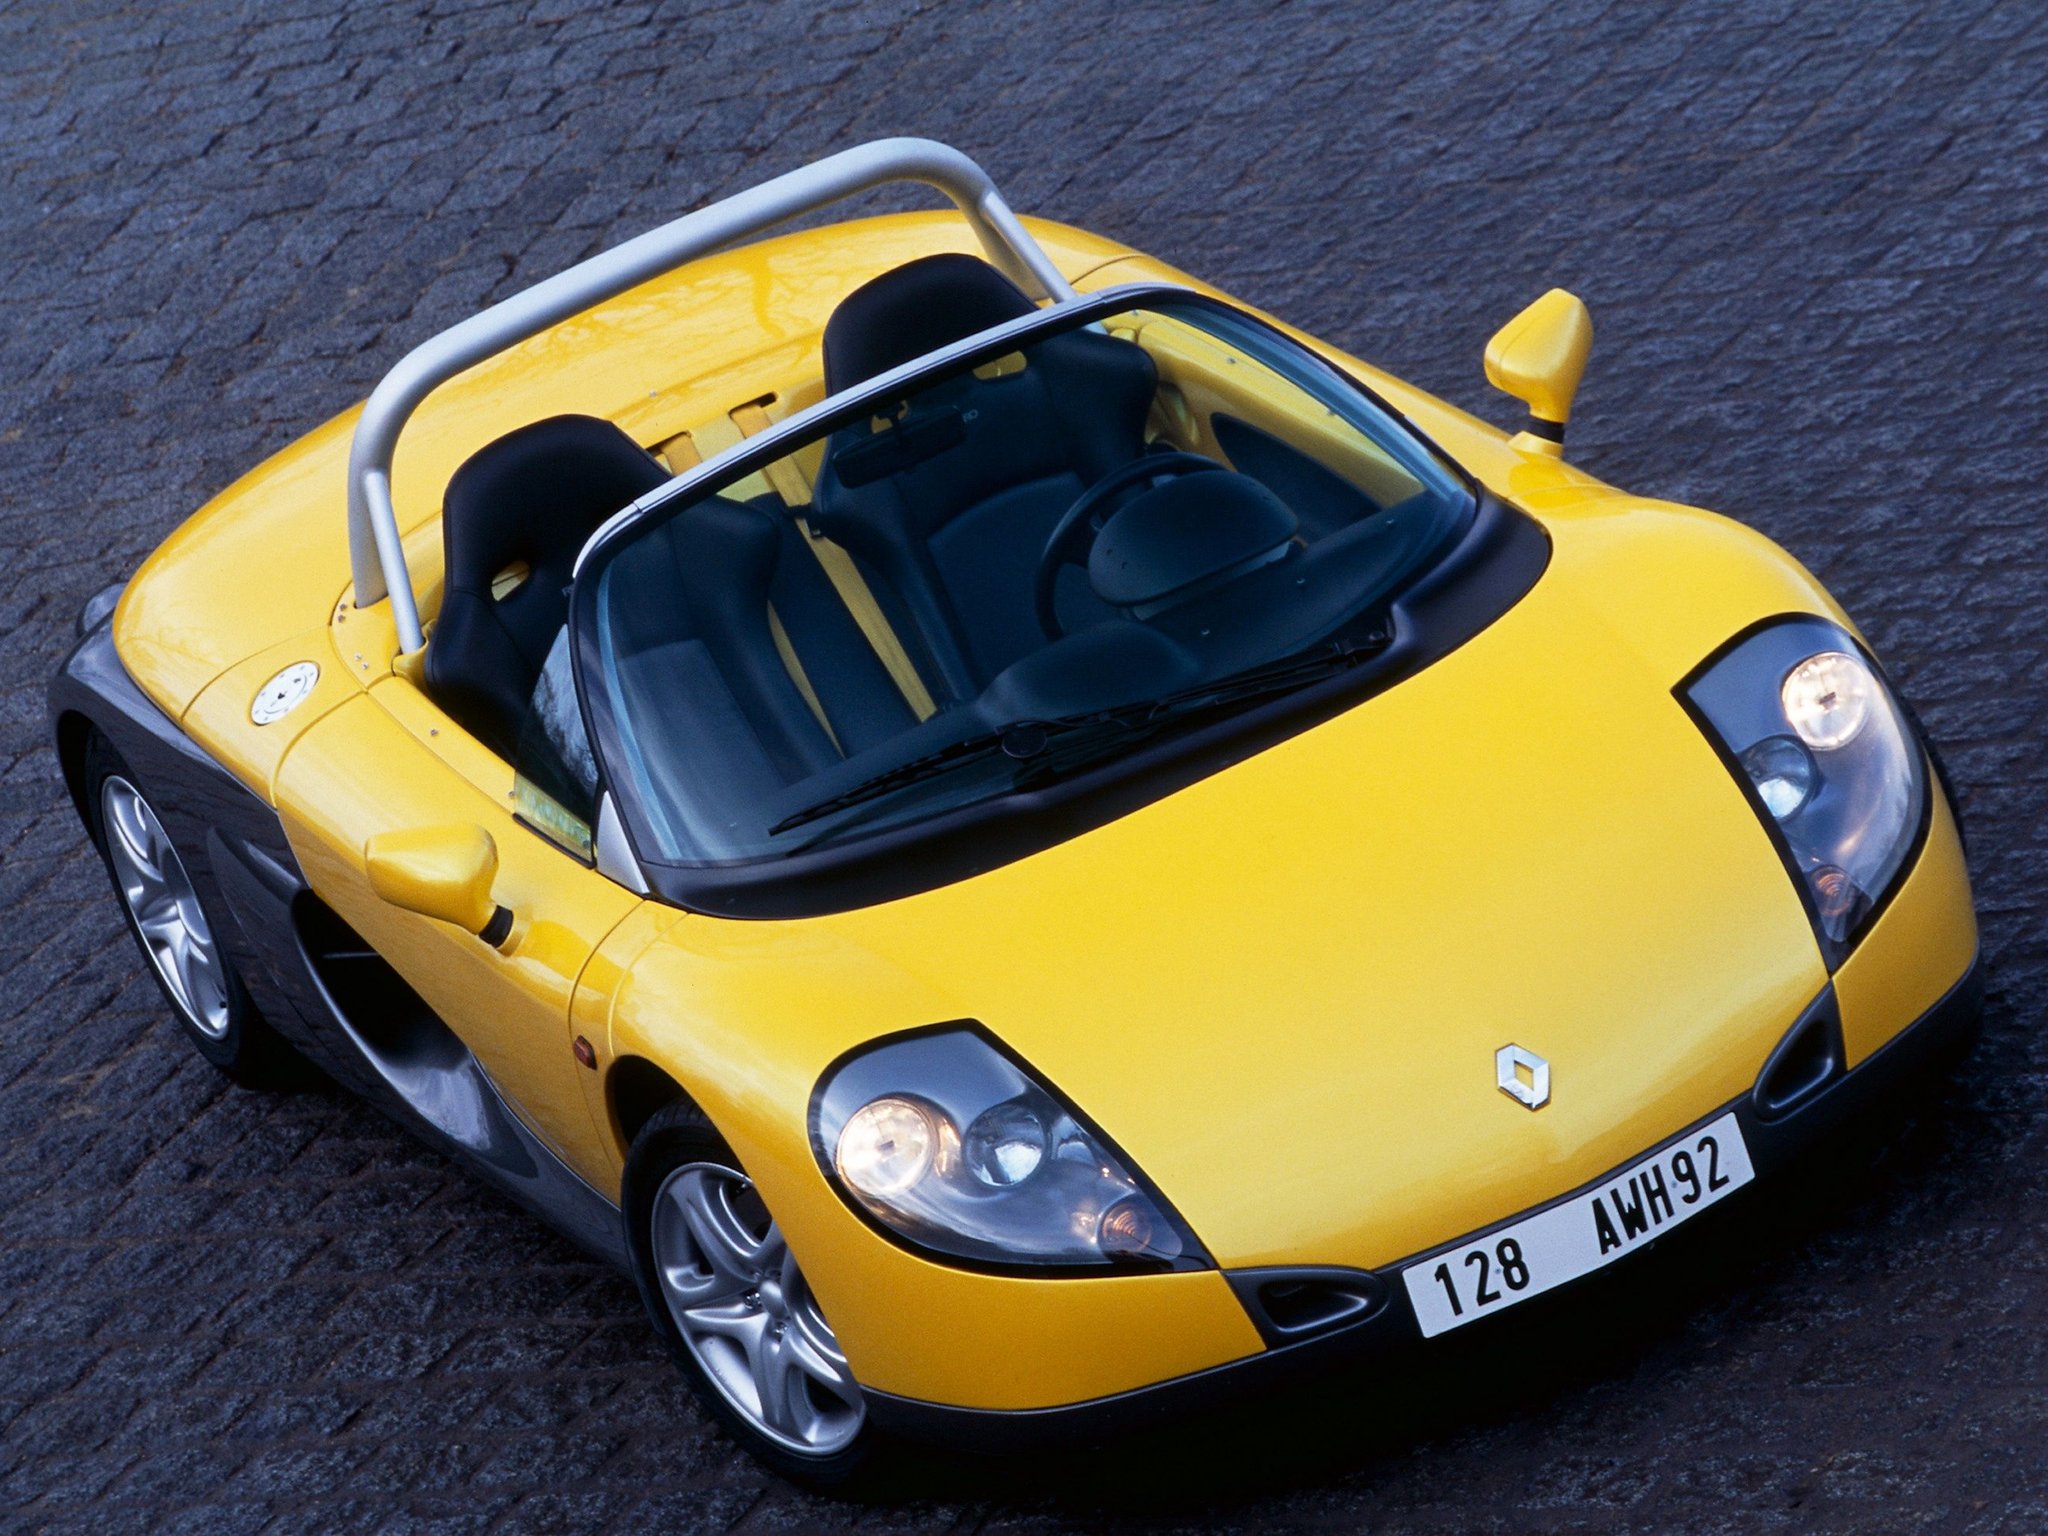 1995 Renault Sport Spider Hs Wallpapers Hd Desktop And Mobile Backgrounds